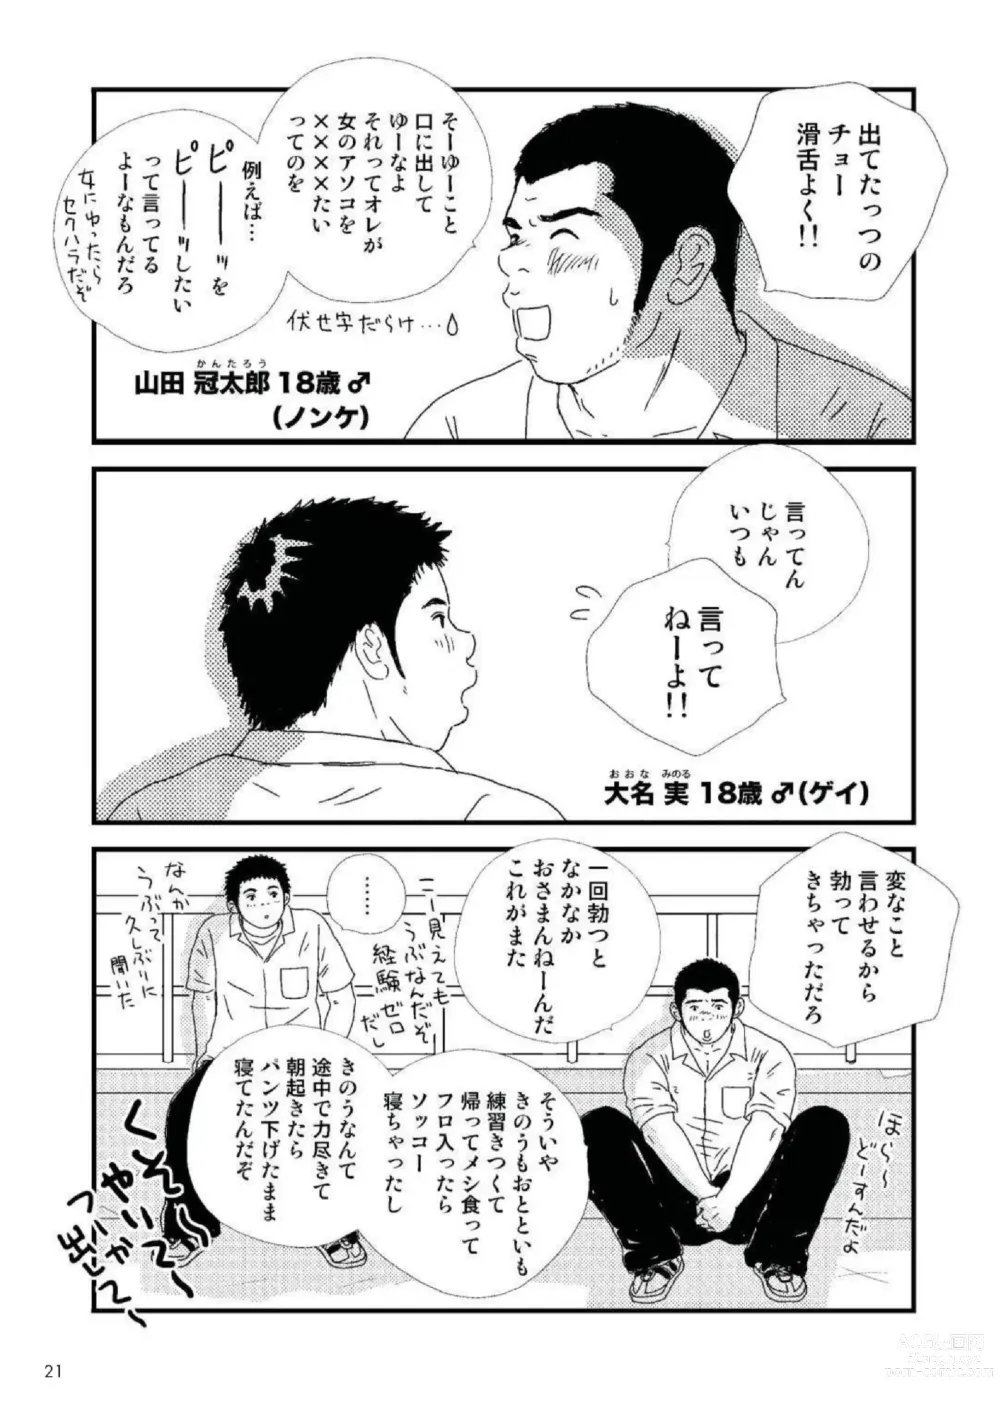 Page 3 of manga SUCK!